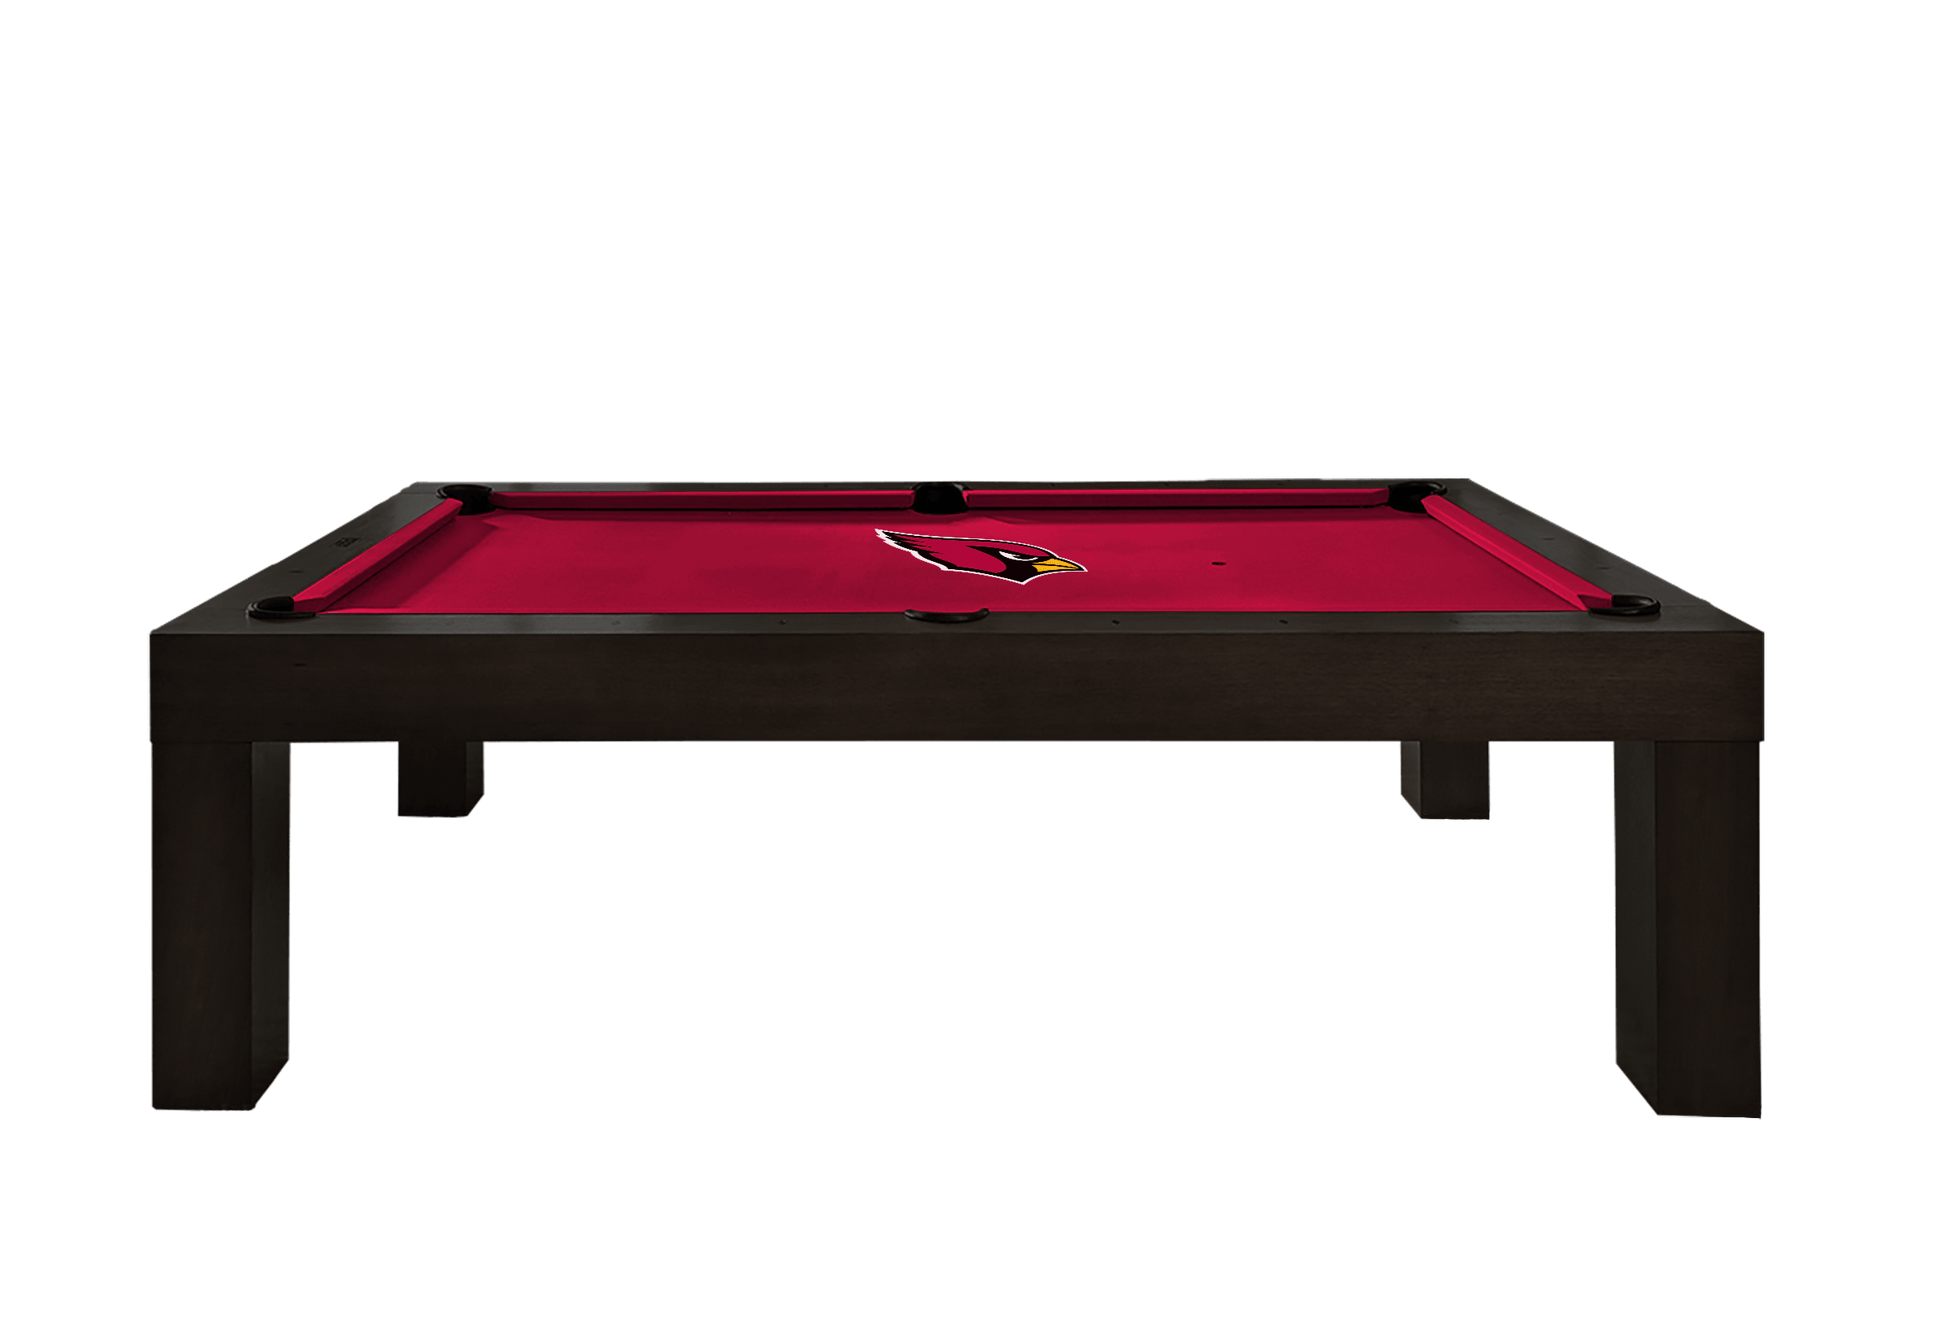 Arizona Cardinals Premium Pool Table Bundle - Black Ash Pool Bundle Home Arcade Games   